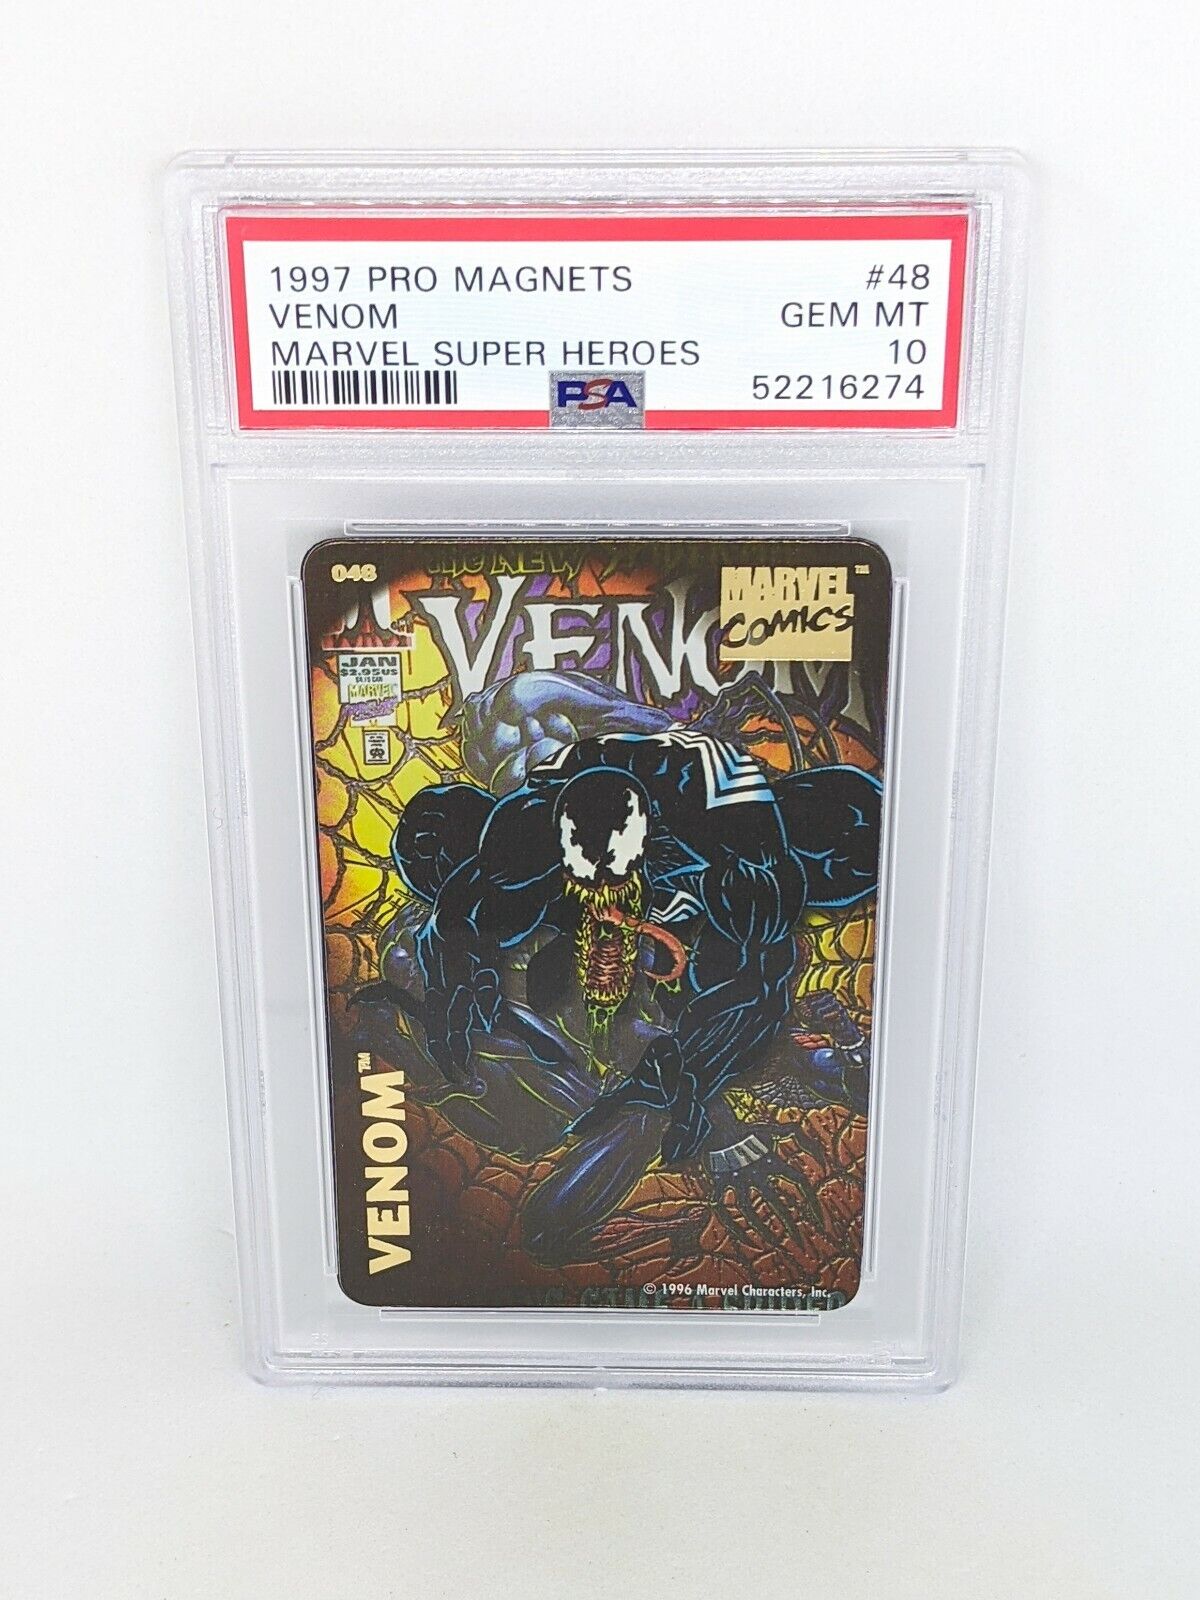 1997 Pro Magnets Marvel Super Heroes #48 Venom PSA 10 POP 2